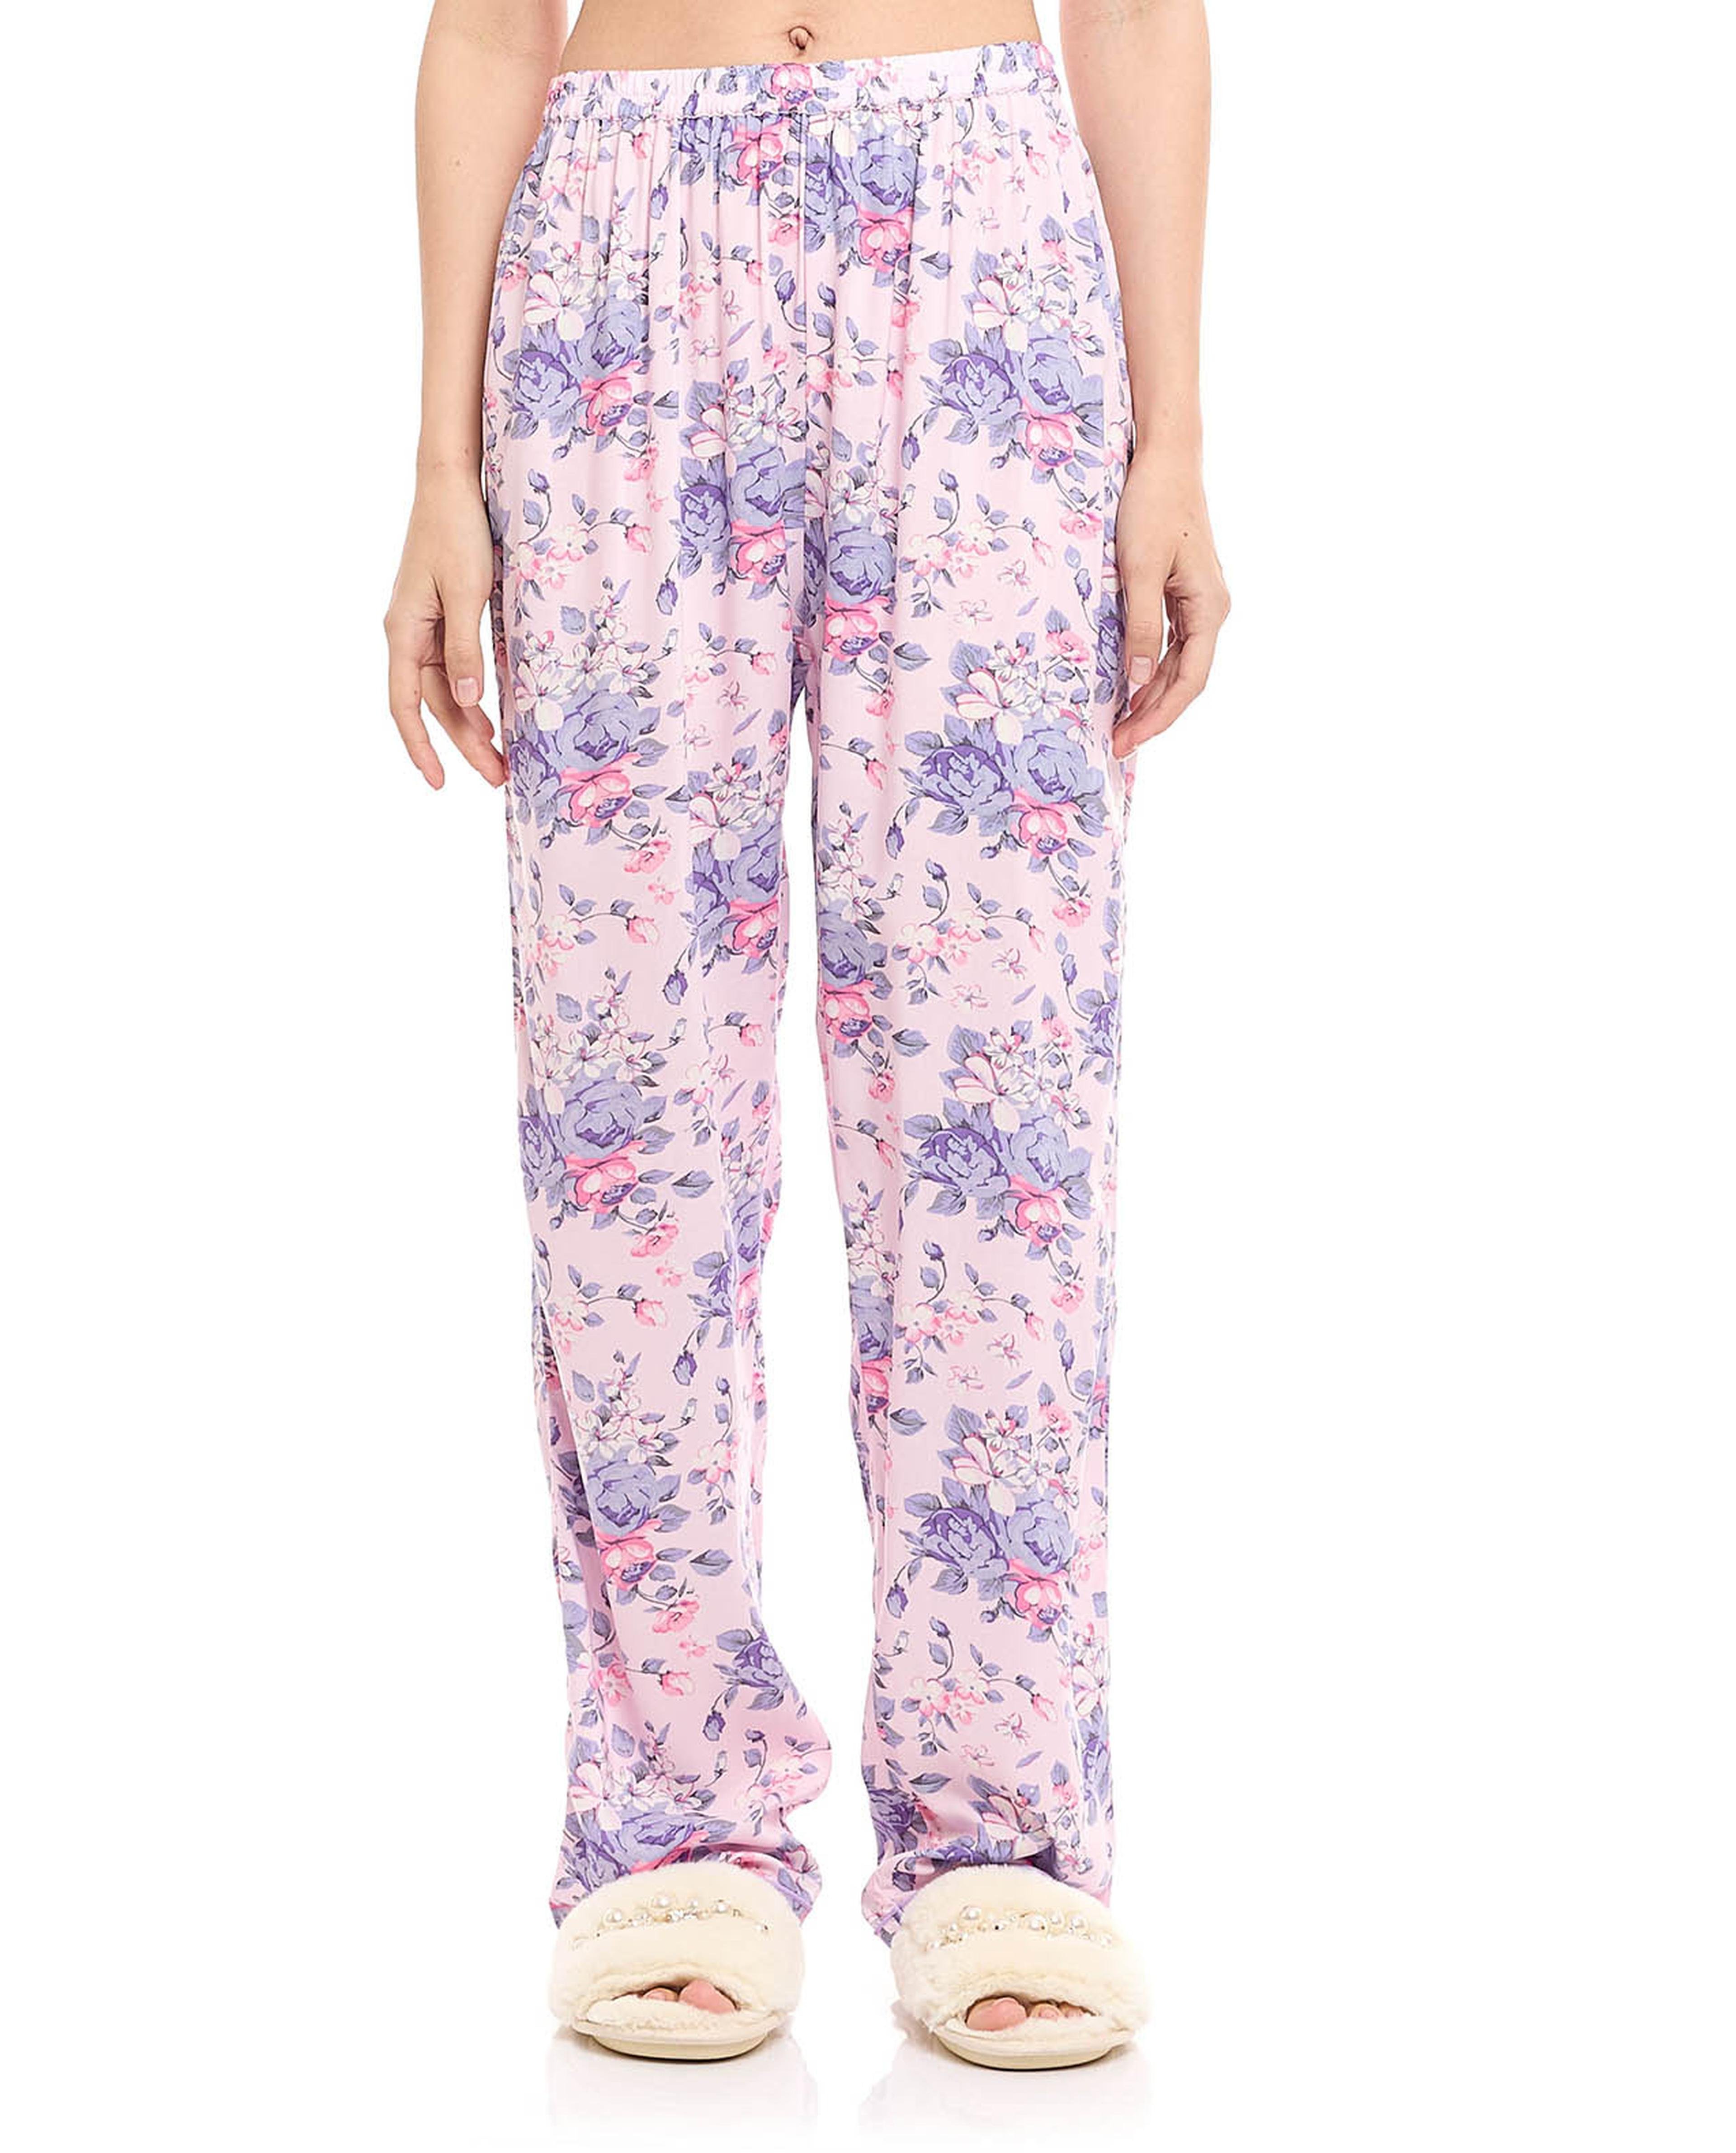 Patterned Pyjama Set